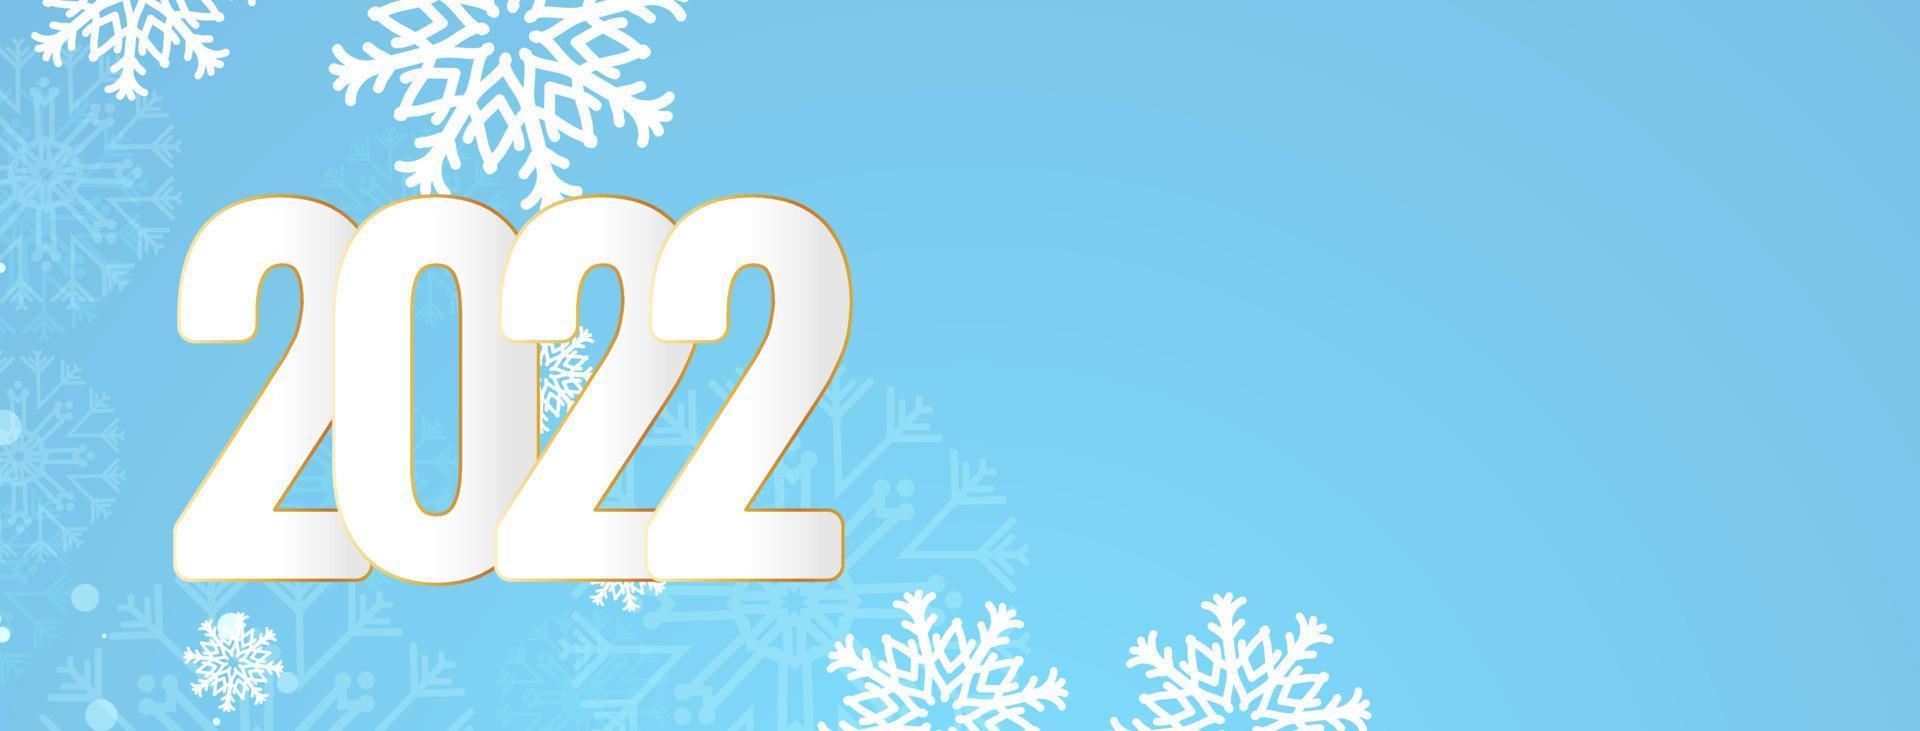 Happy new year 2022 soft blue banner design vector